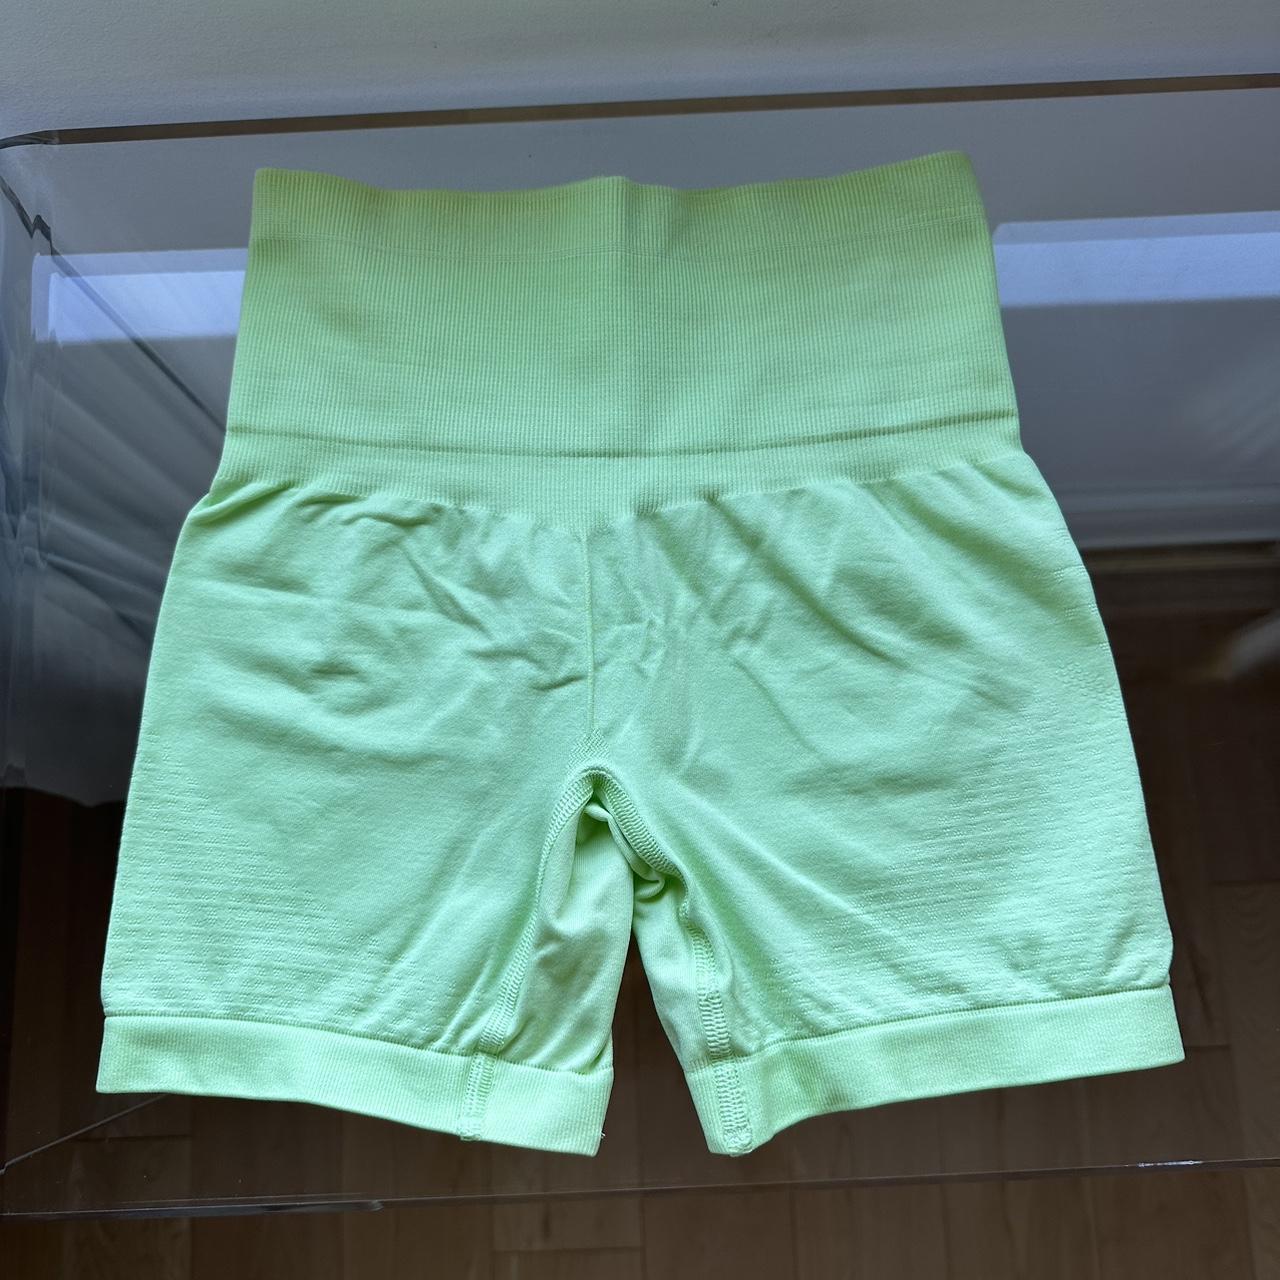 Apex Seamless Shorts